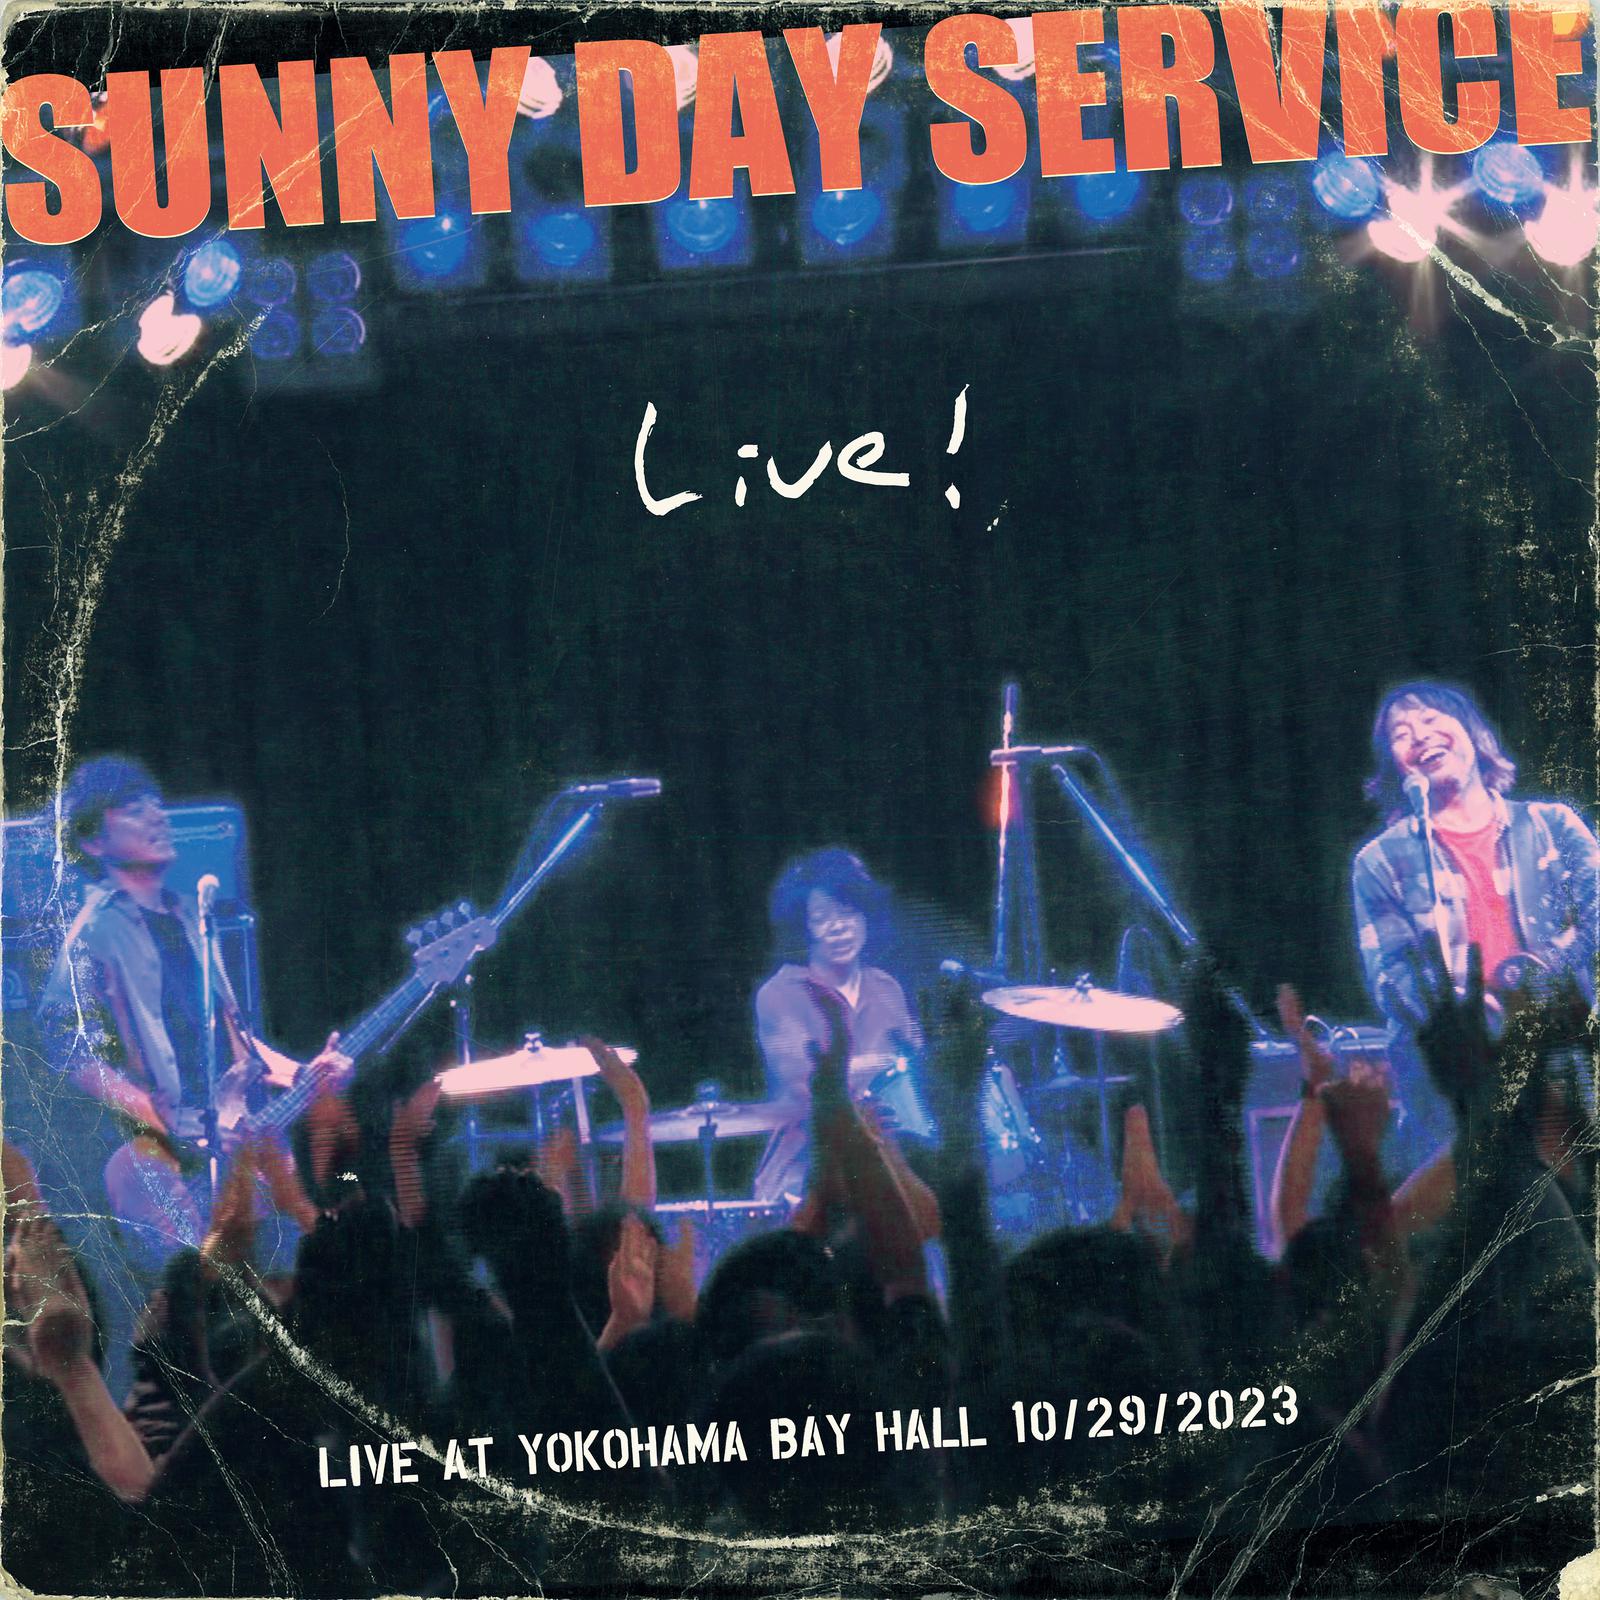 Sunny Day Service - 青春狂走曲 (LIVE AT YOKOHAMA BAY HALL 10/29/2023)